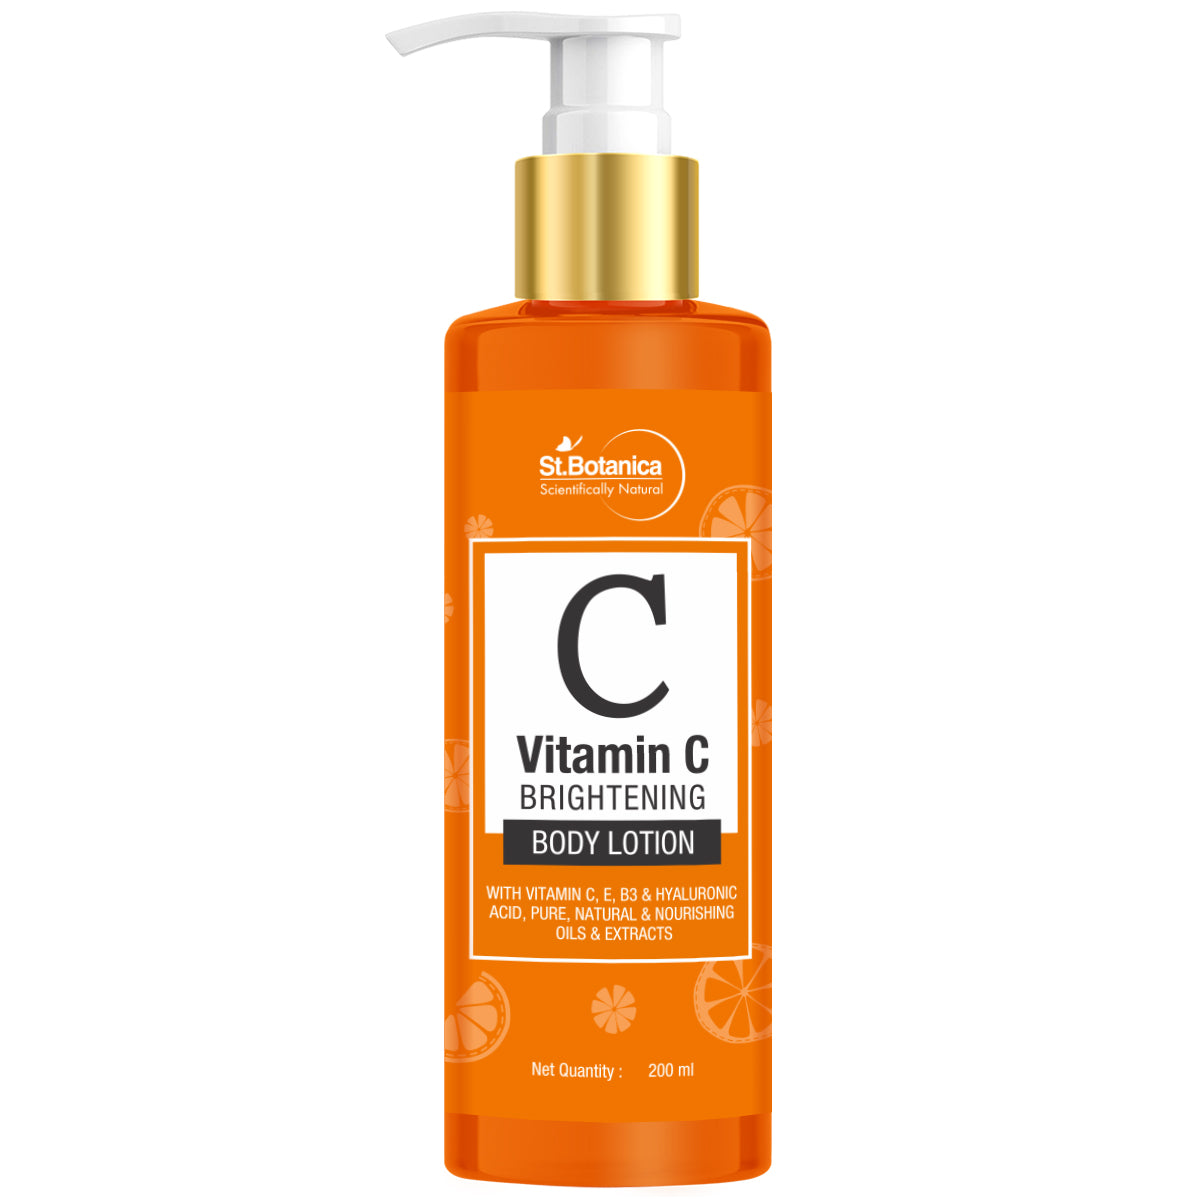 St.Botanica Vitamin C Skin Brightening Body Lotion, with Vitamin C, E, Hyaluronic Acid and Pure Nourishing Oils, (200 ml, Normal Skin)